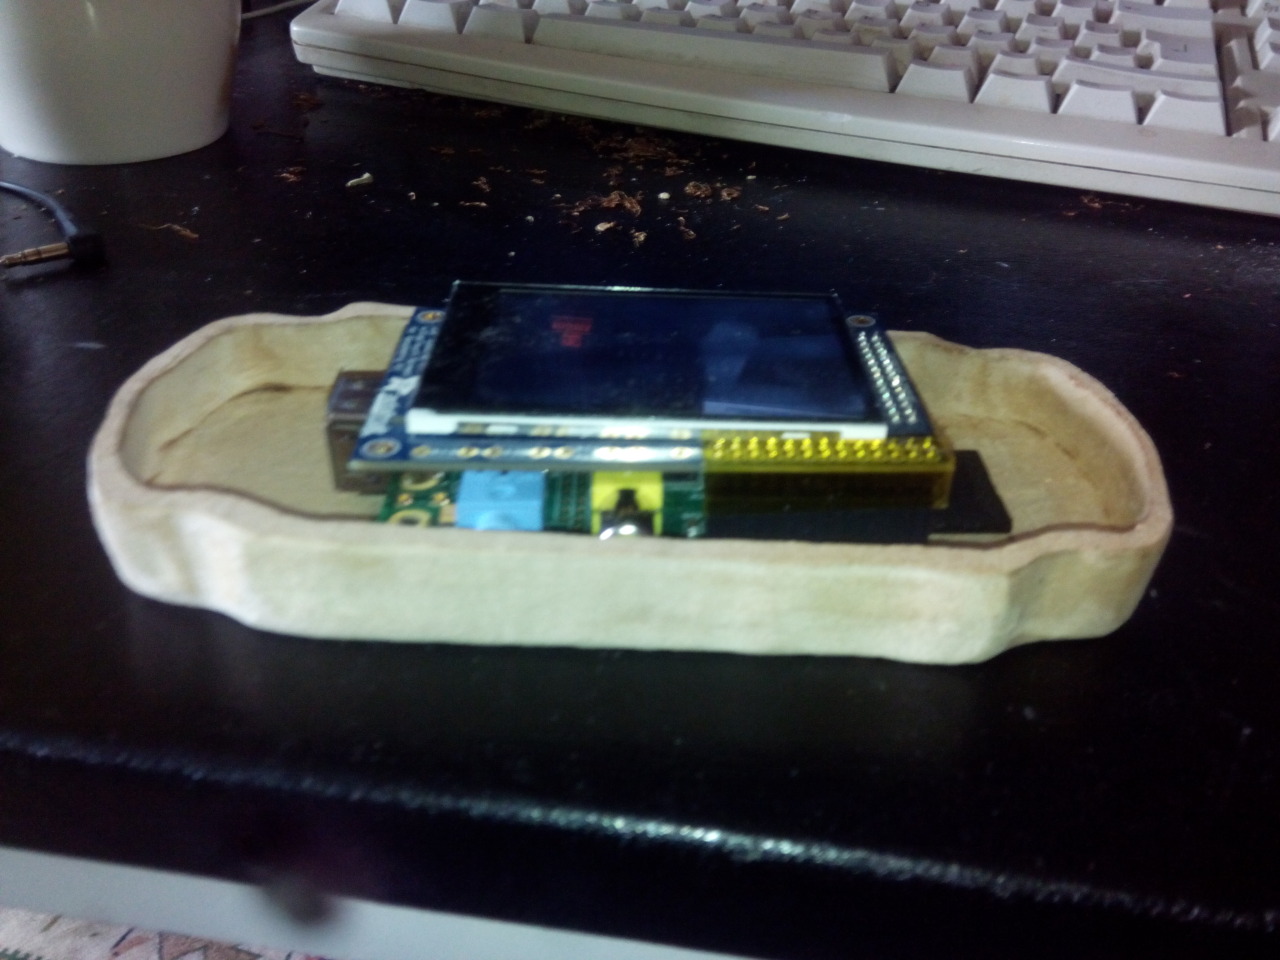 Woodwork:
PSP back case in wood =)